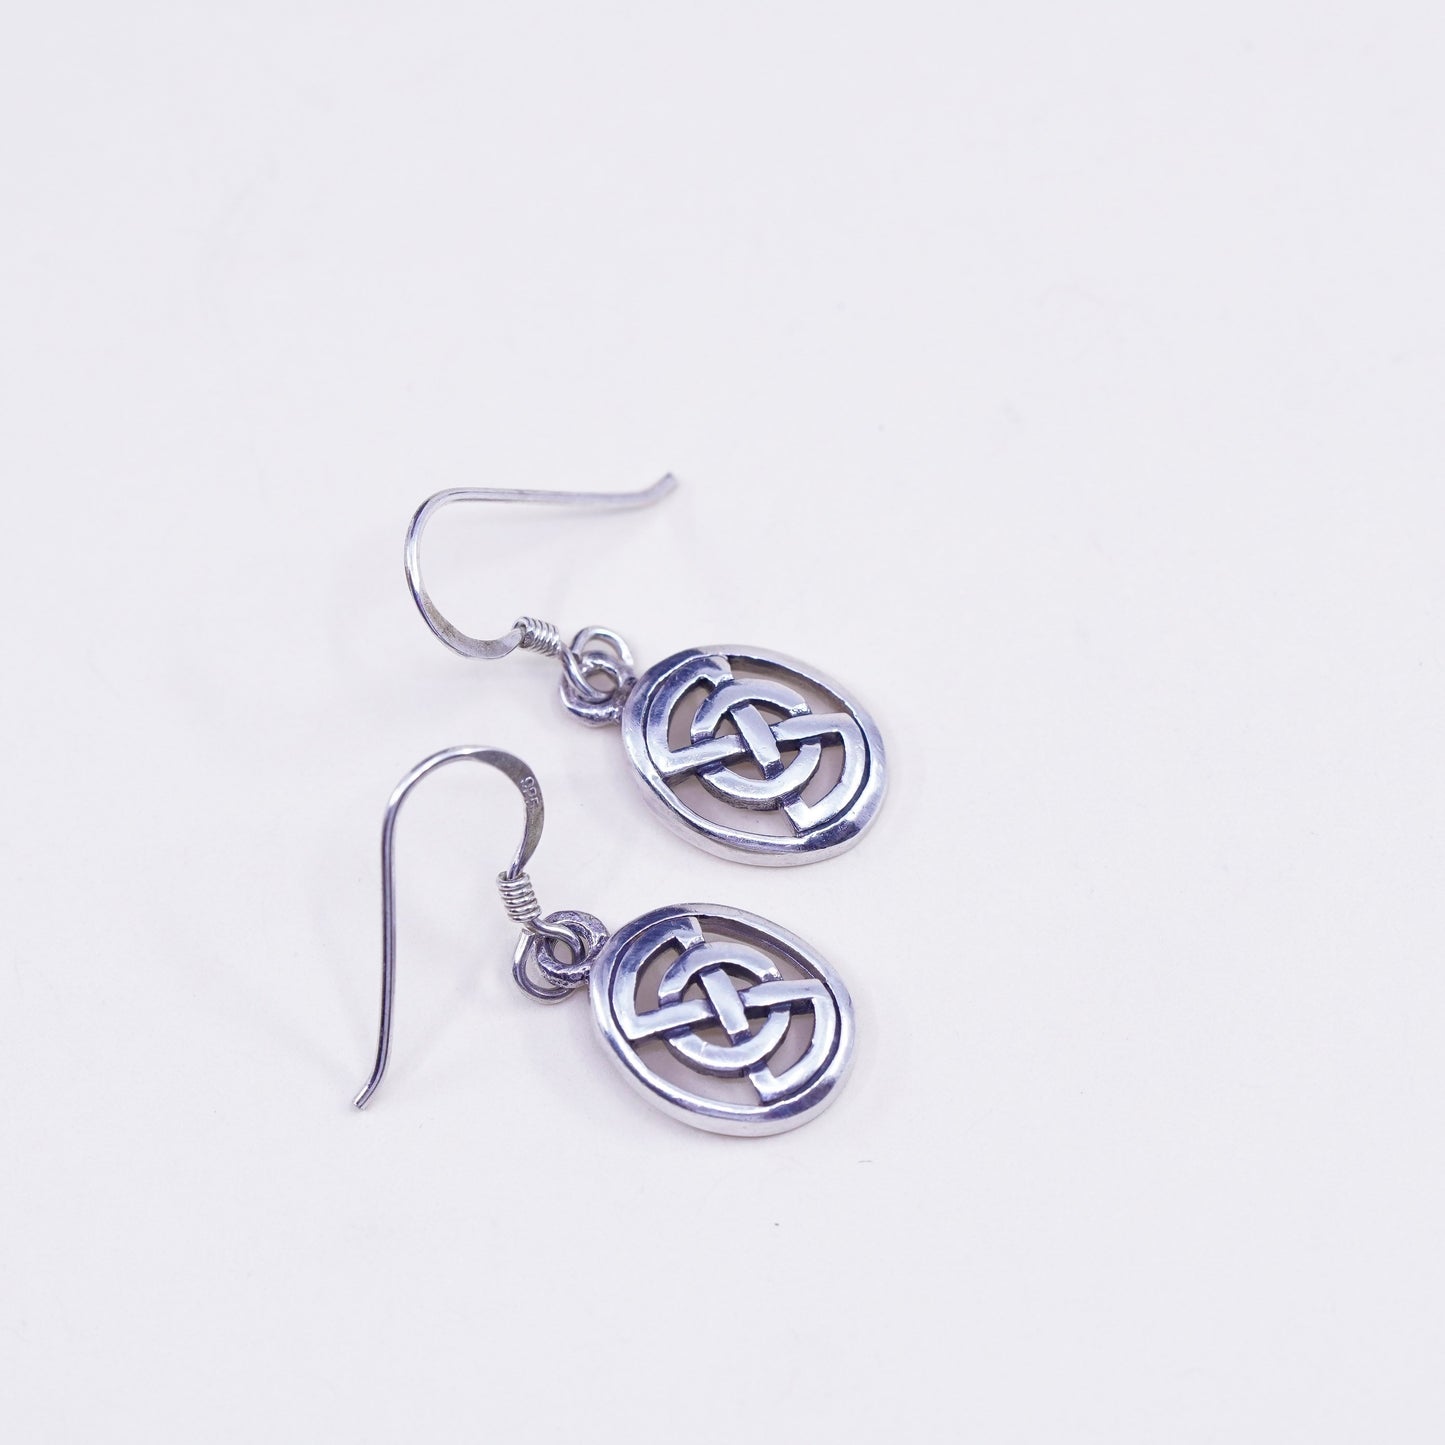 Vintage Irish Sterling silver handmade earrings, 925 Celtic knot dangles